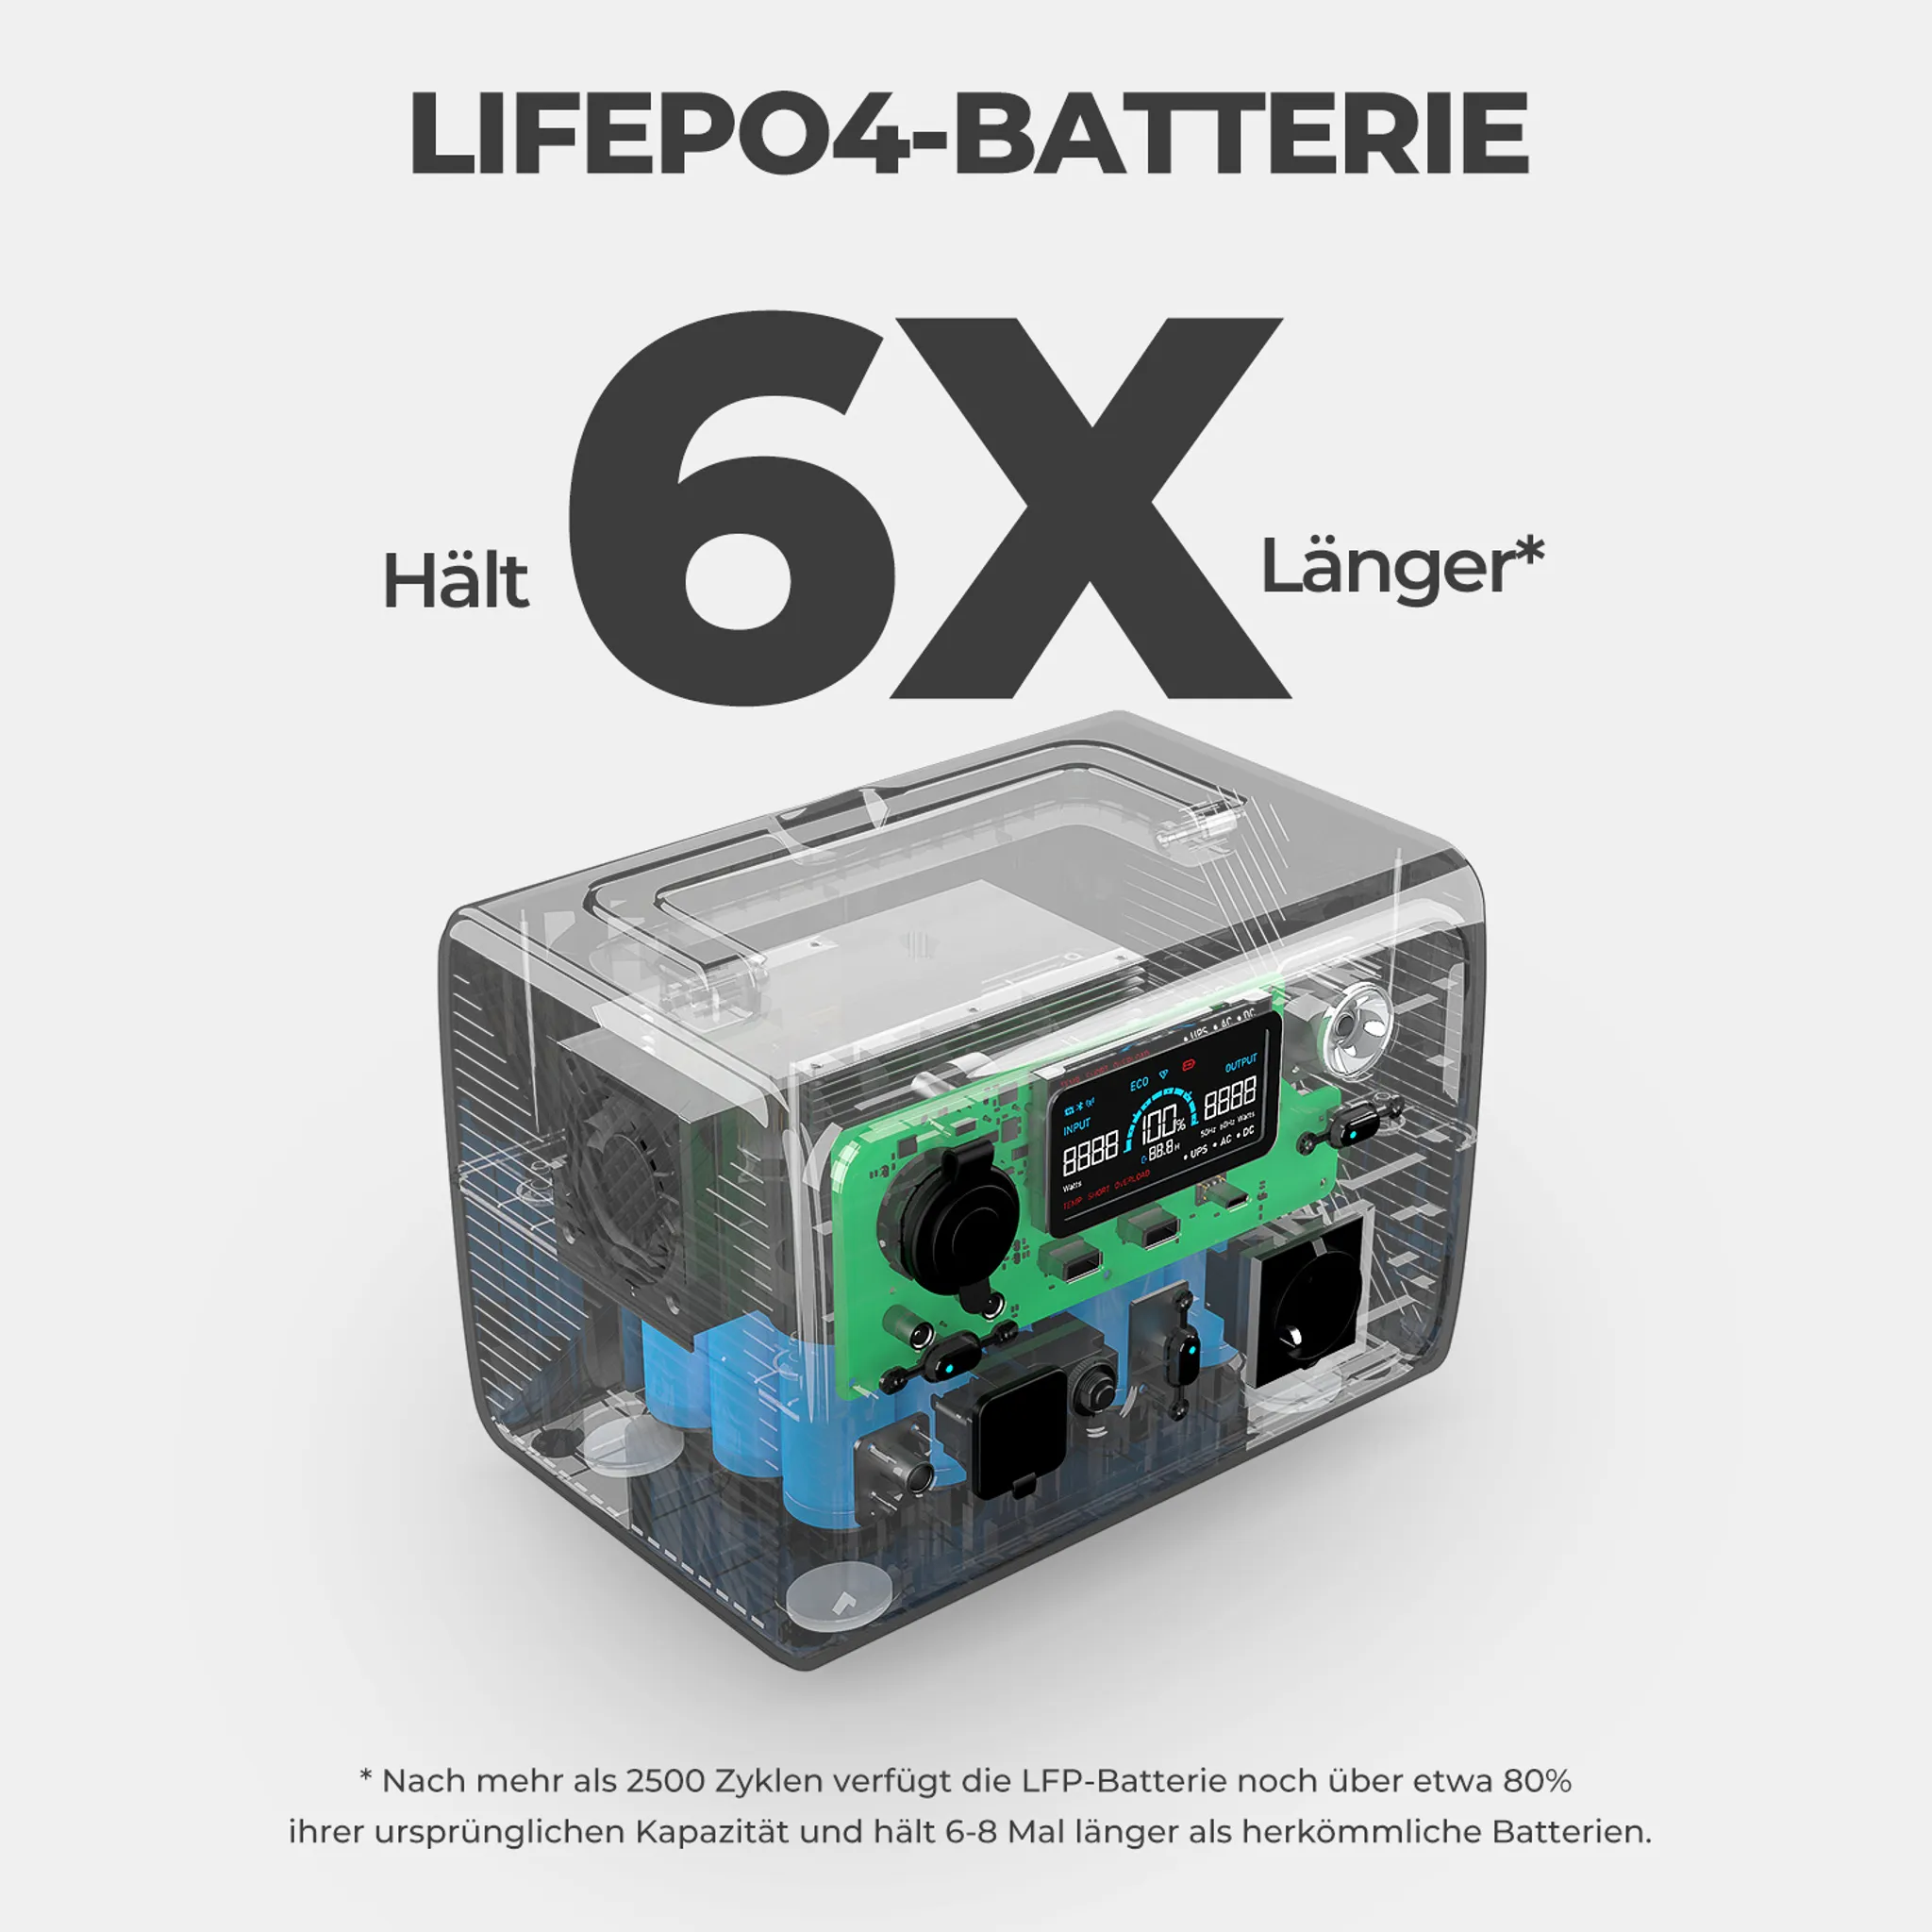 Wh EB3A grau Powerstation Batterie Tragbare LiFePO4 Stromausfälle, für 268 Off-Grid Stromgenerator BLUETTI 600W Gärten,